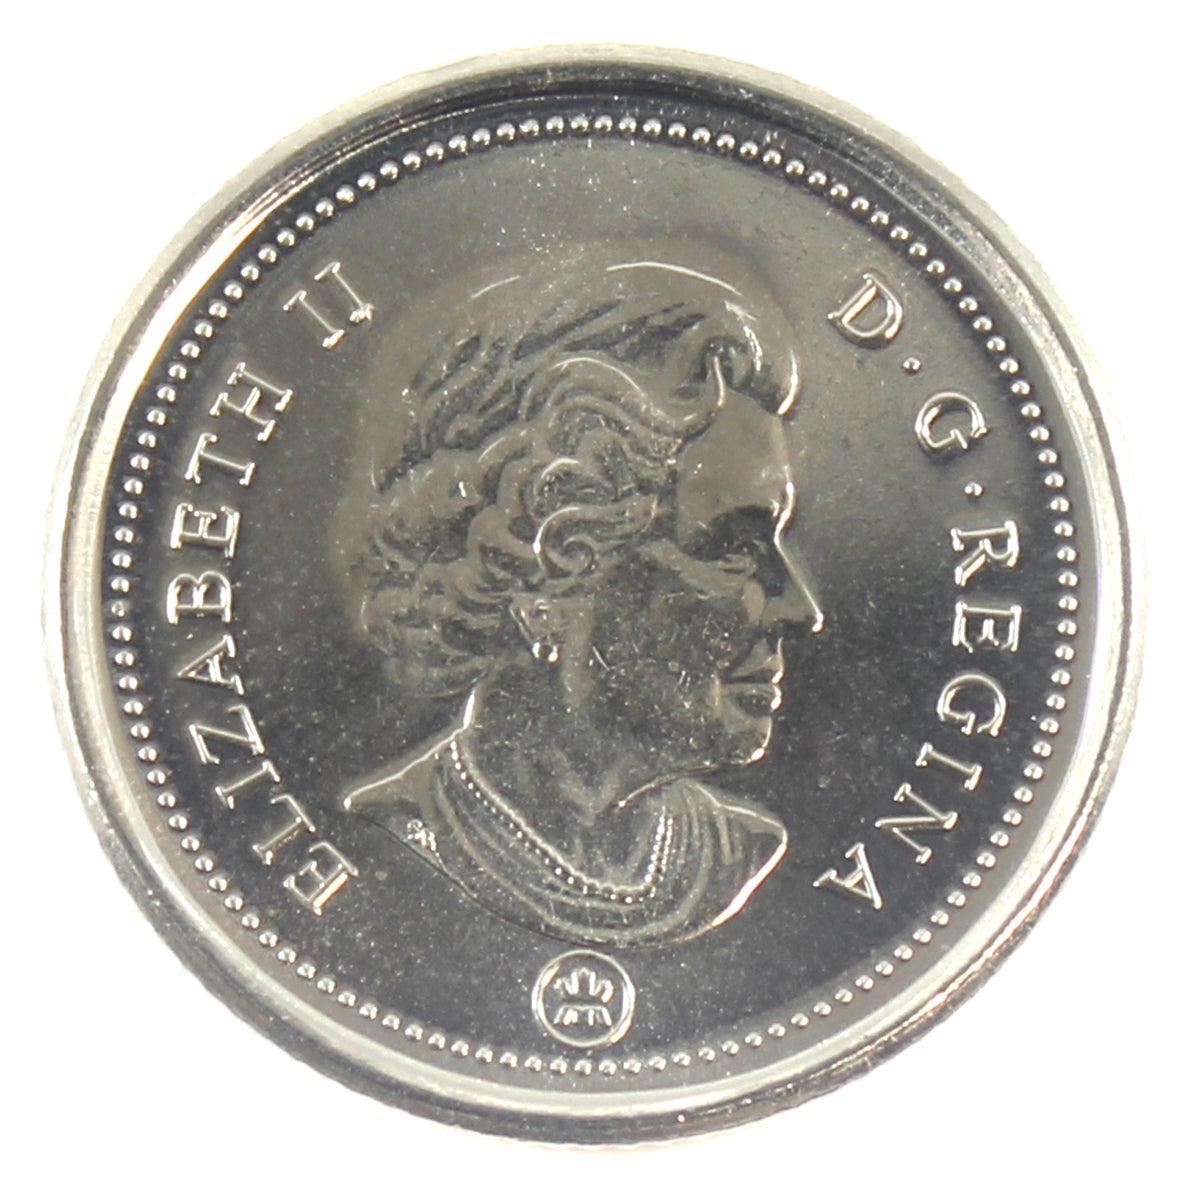 2010 Canada 10-cent Brilliant Uncirculated (MS-63)